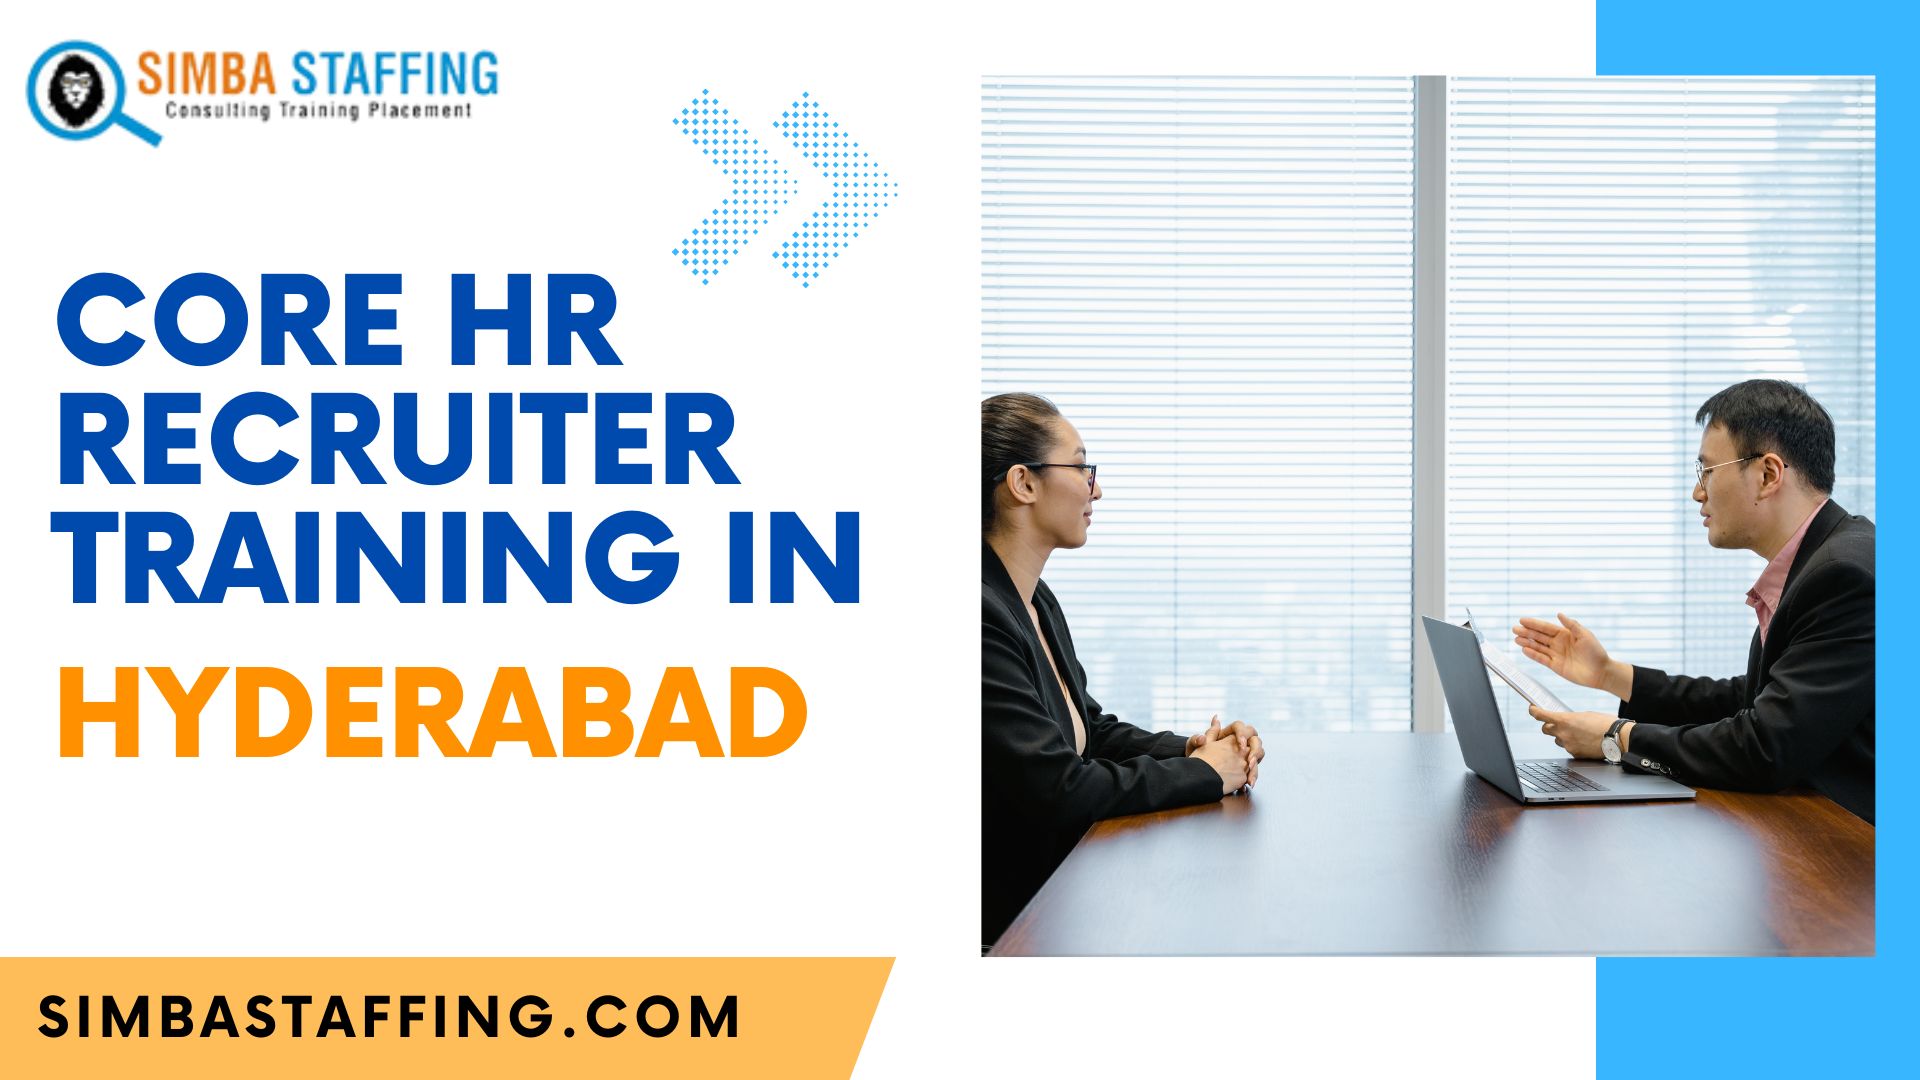 Core HR Recruiter Training In Hyderabad